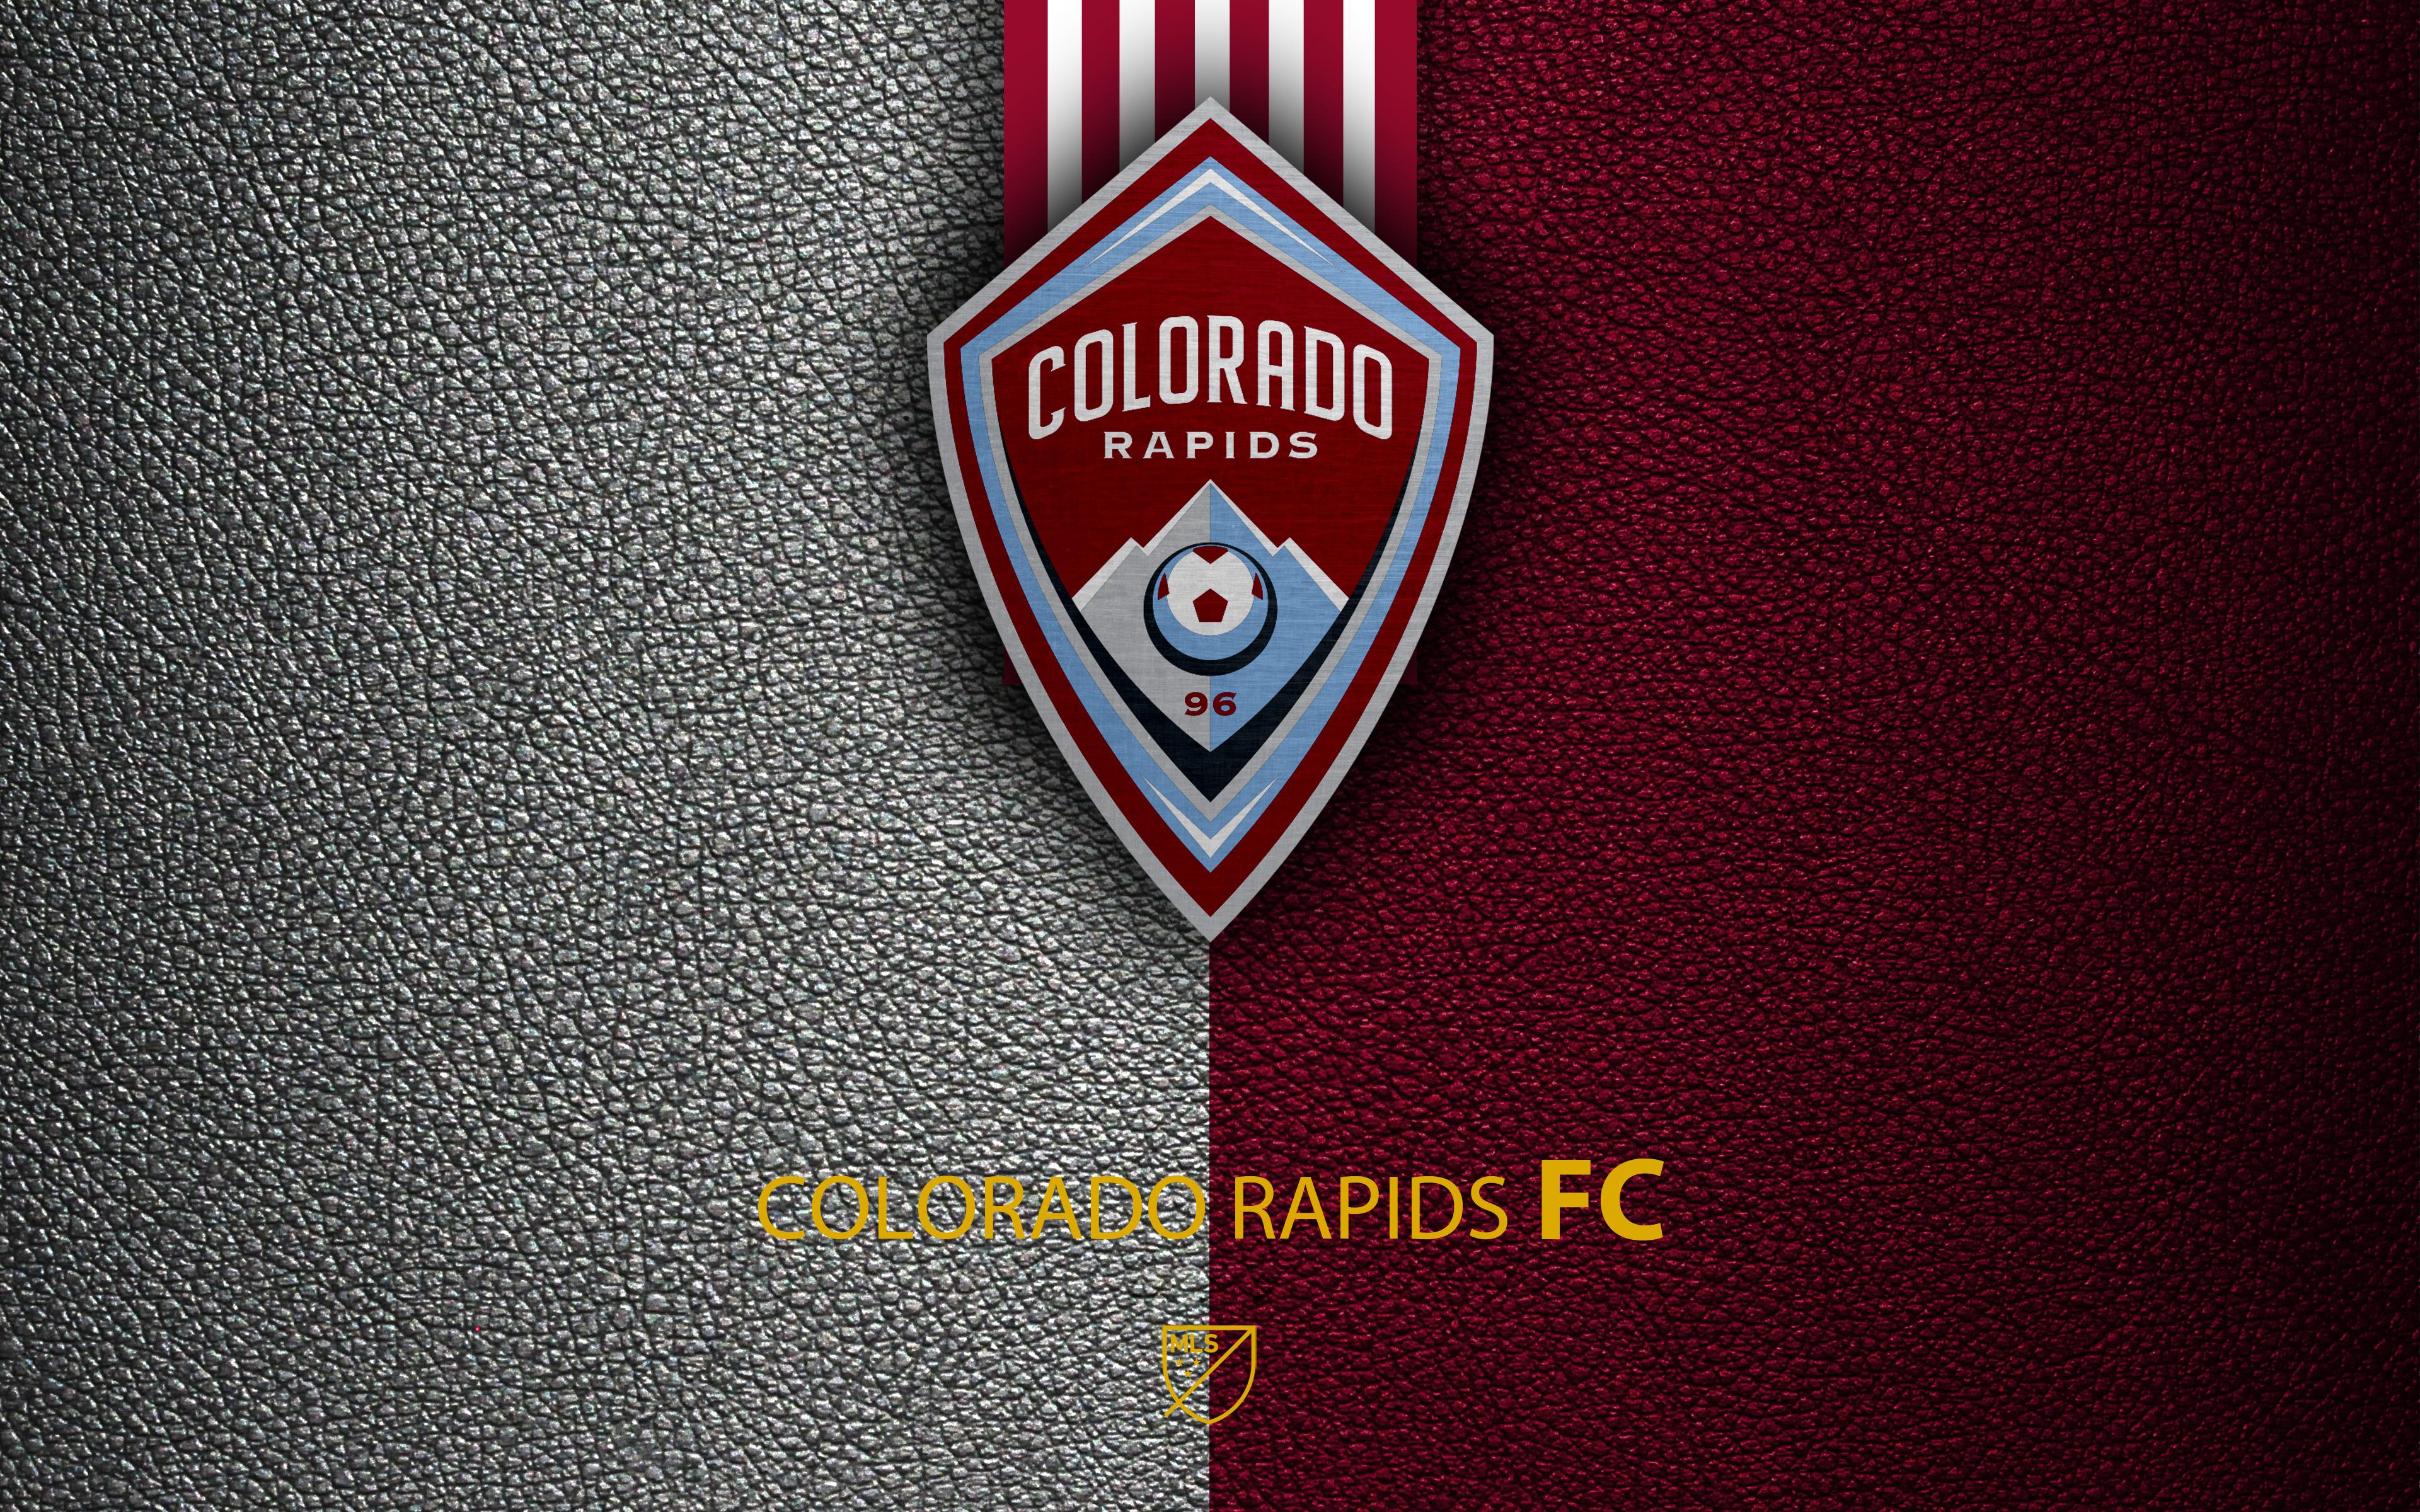 باشگاه فوتبال کلرادو رپیدز (Colorado Rapids)